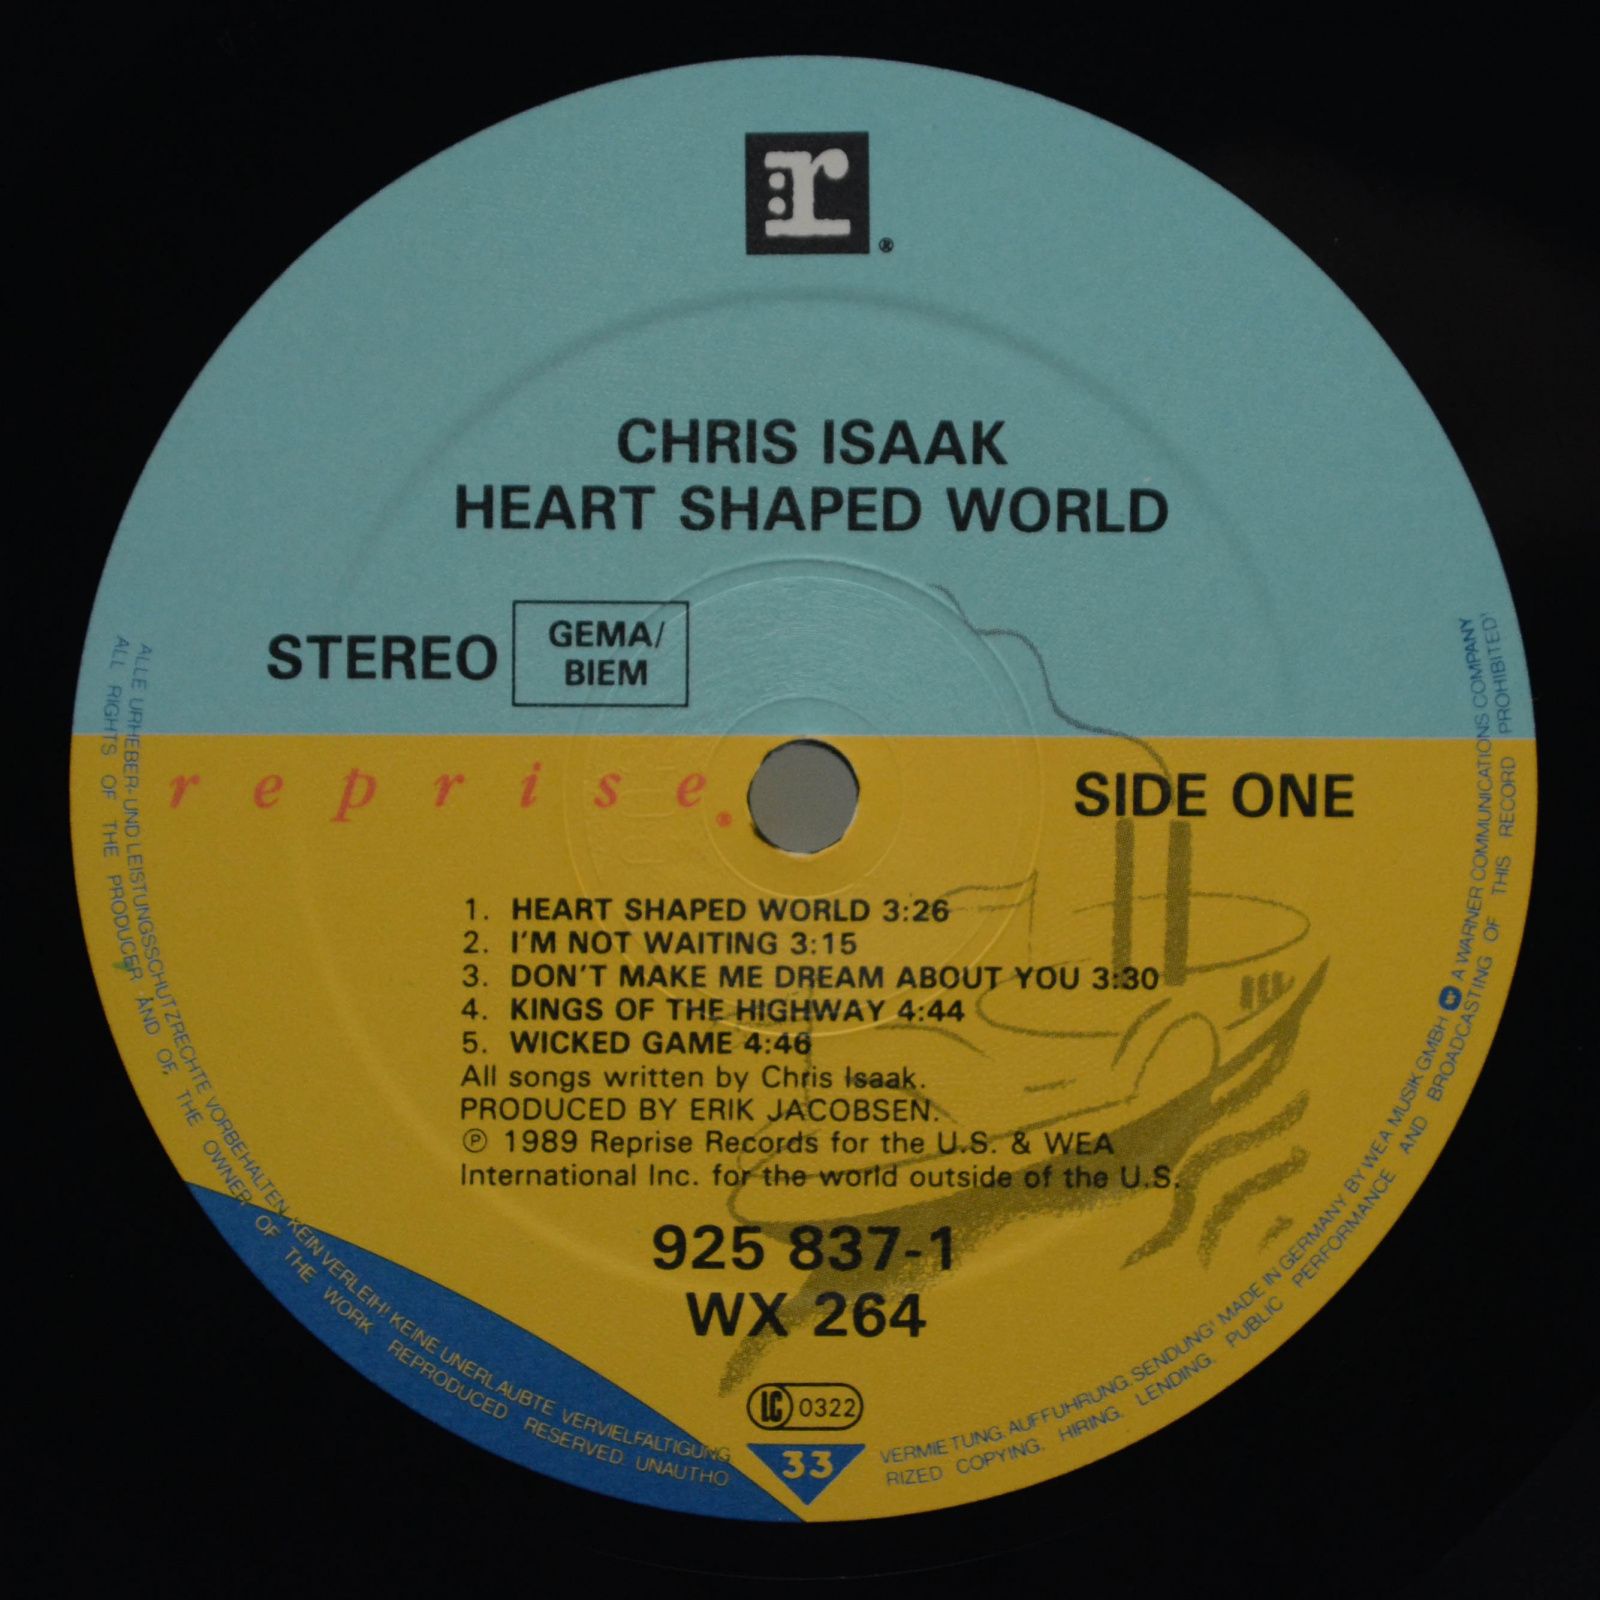 Chris Isaak — Heart Shaped World, 1989